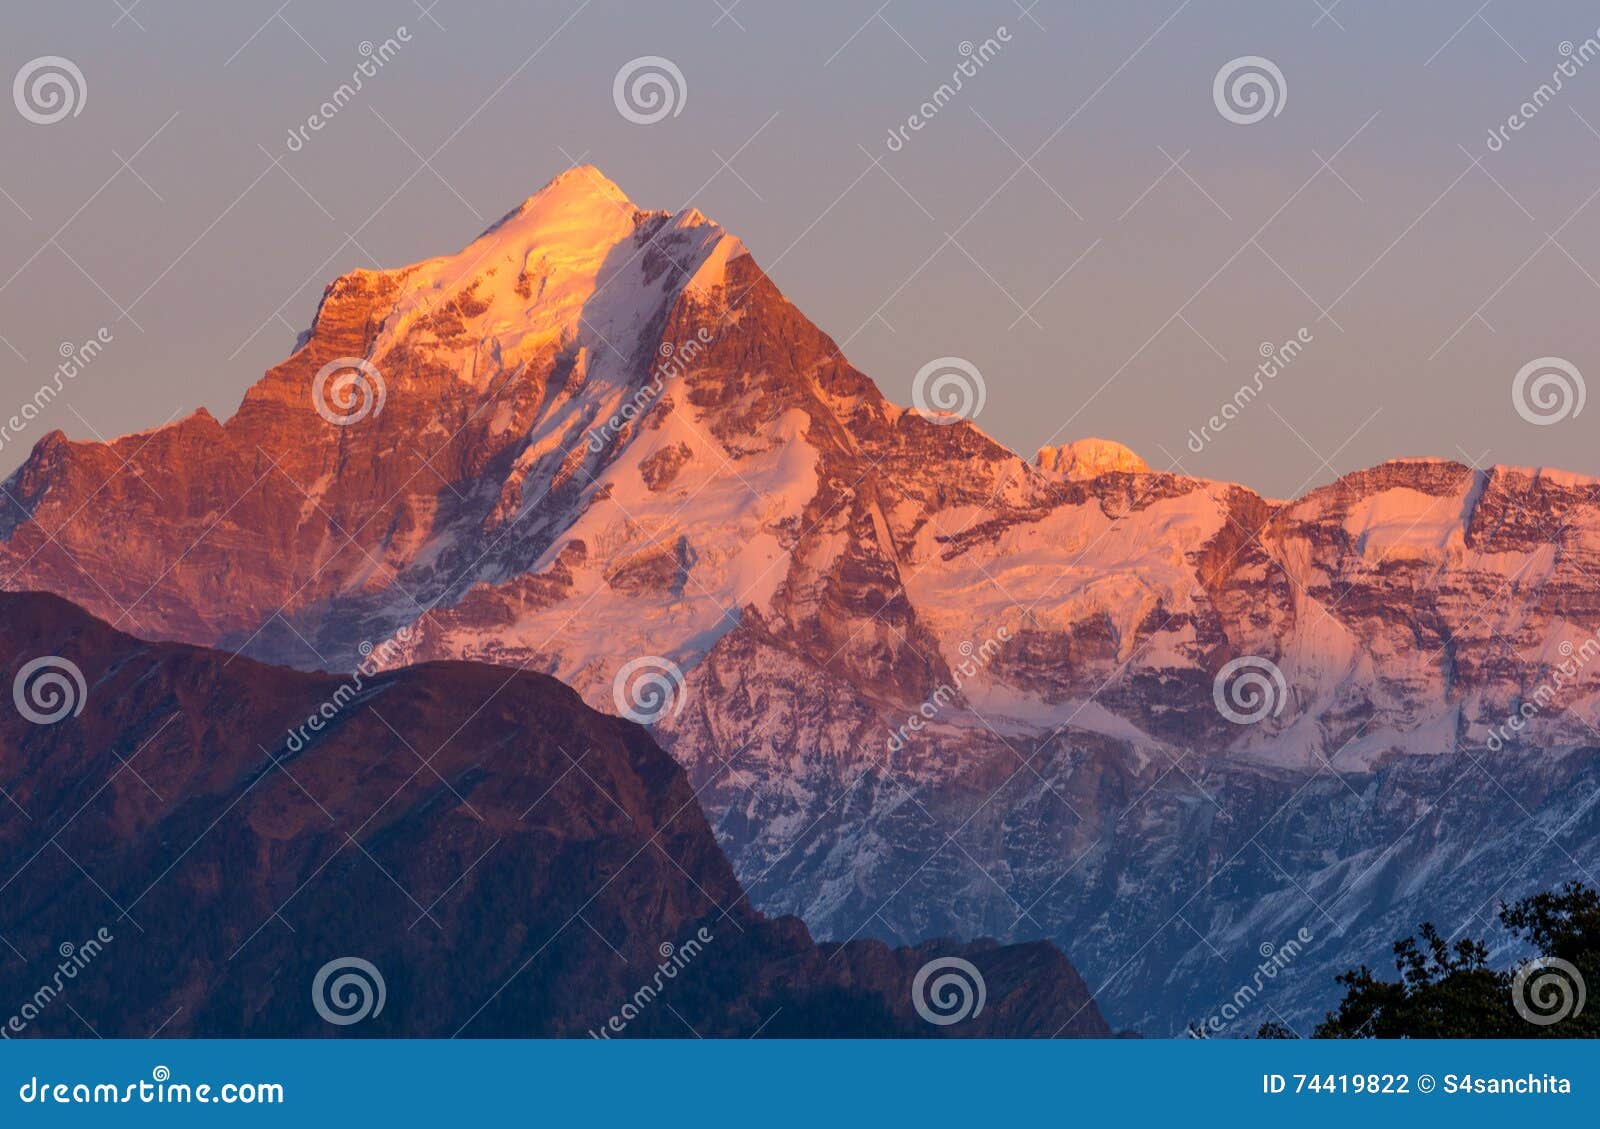 snow clad peak in himalaya